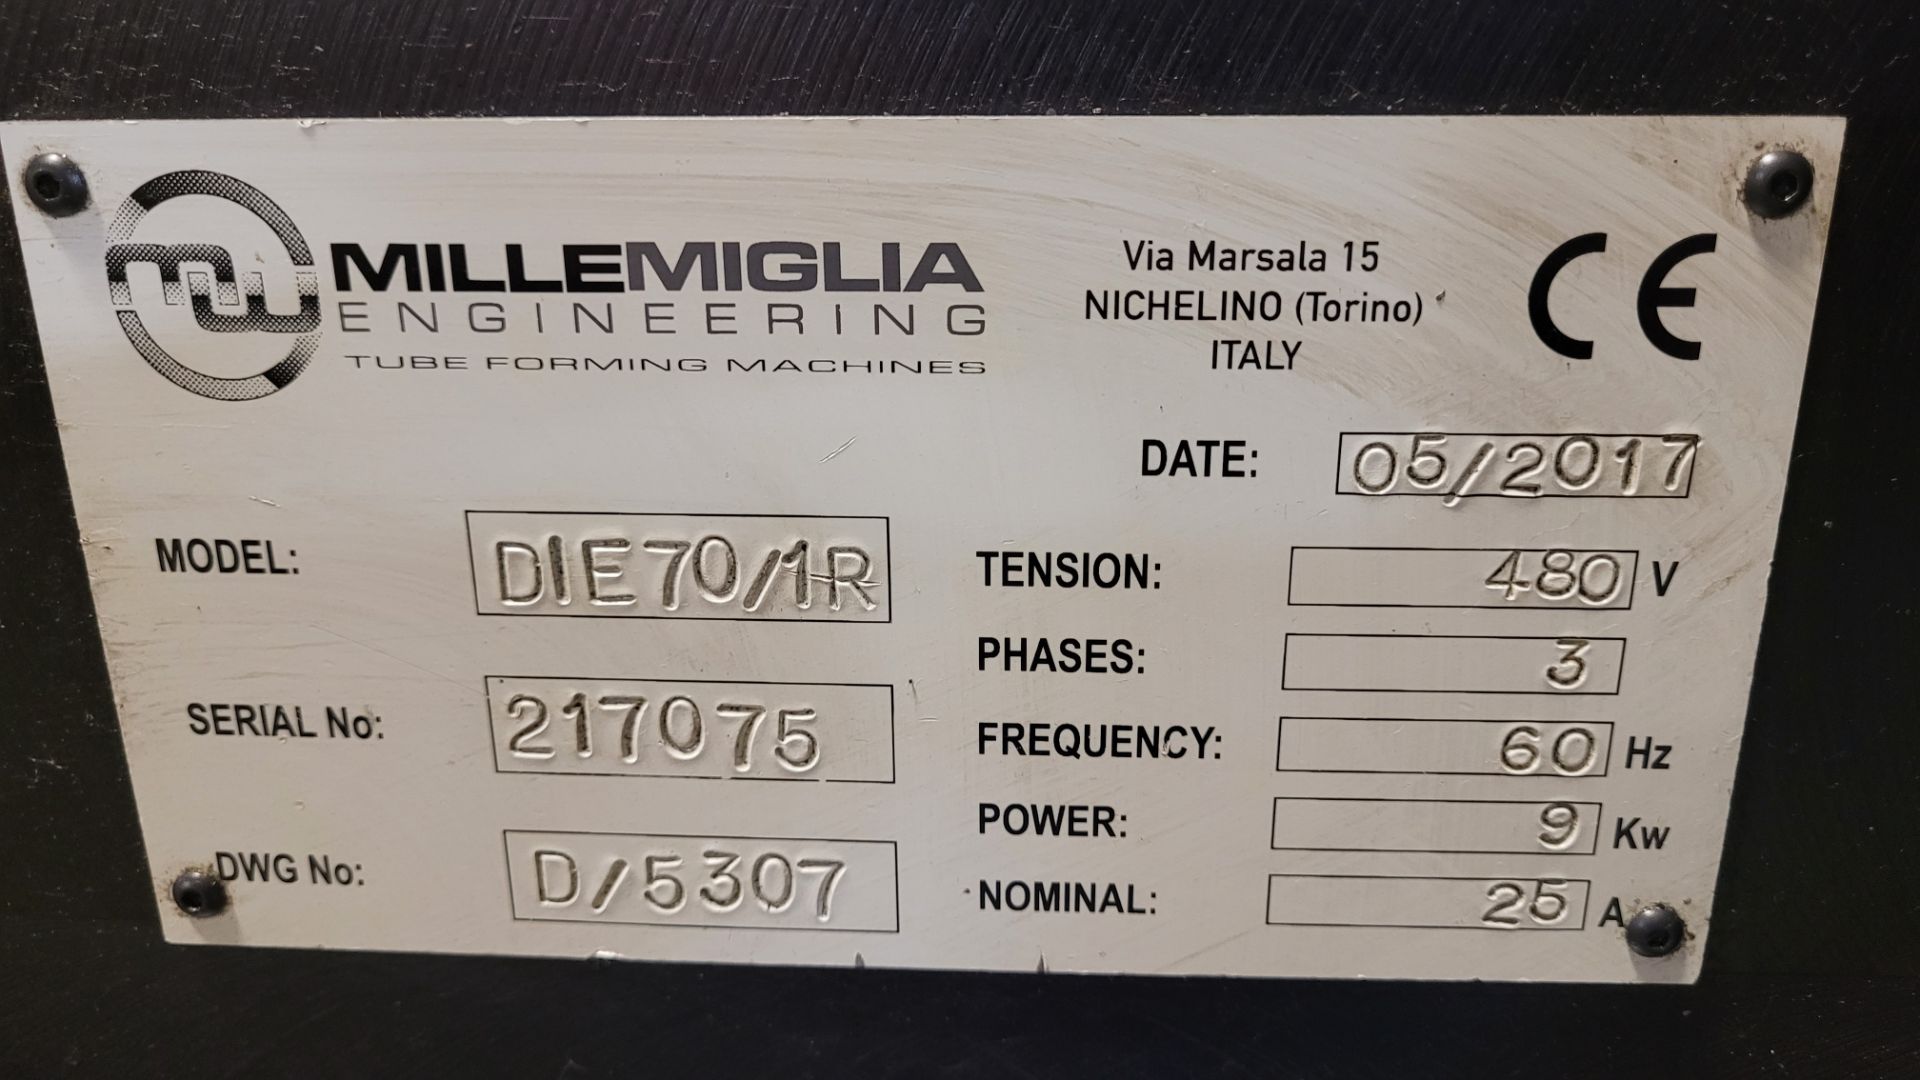 2017 MW MILLEMIGLIA ENGINEERING TUBE END FORMING MACHINE MODEL DIE70/1ROT 1" TO 2.25" CAP. SIEMENS - Image 4 of 10